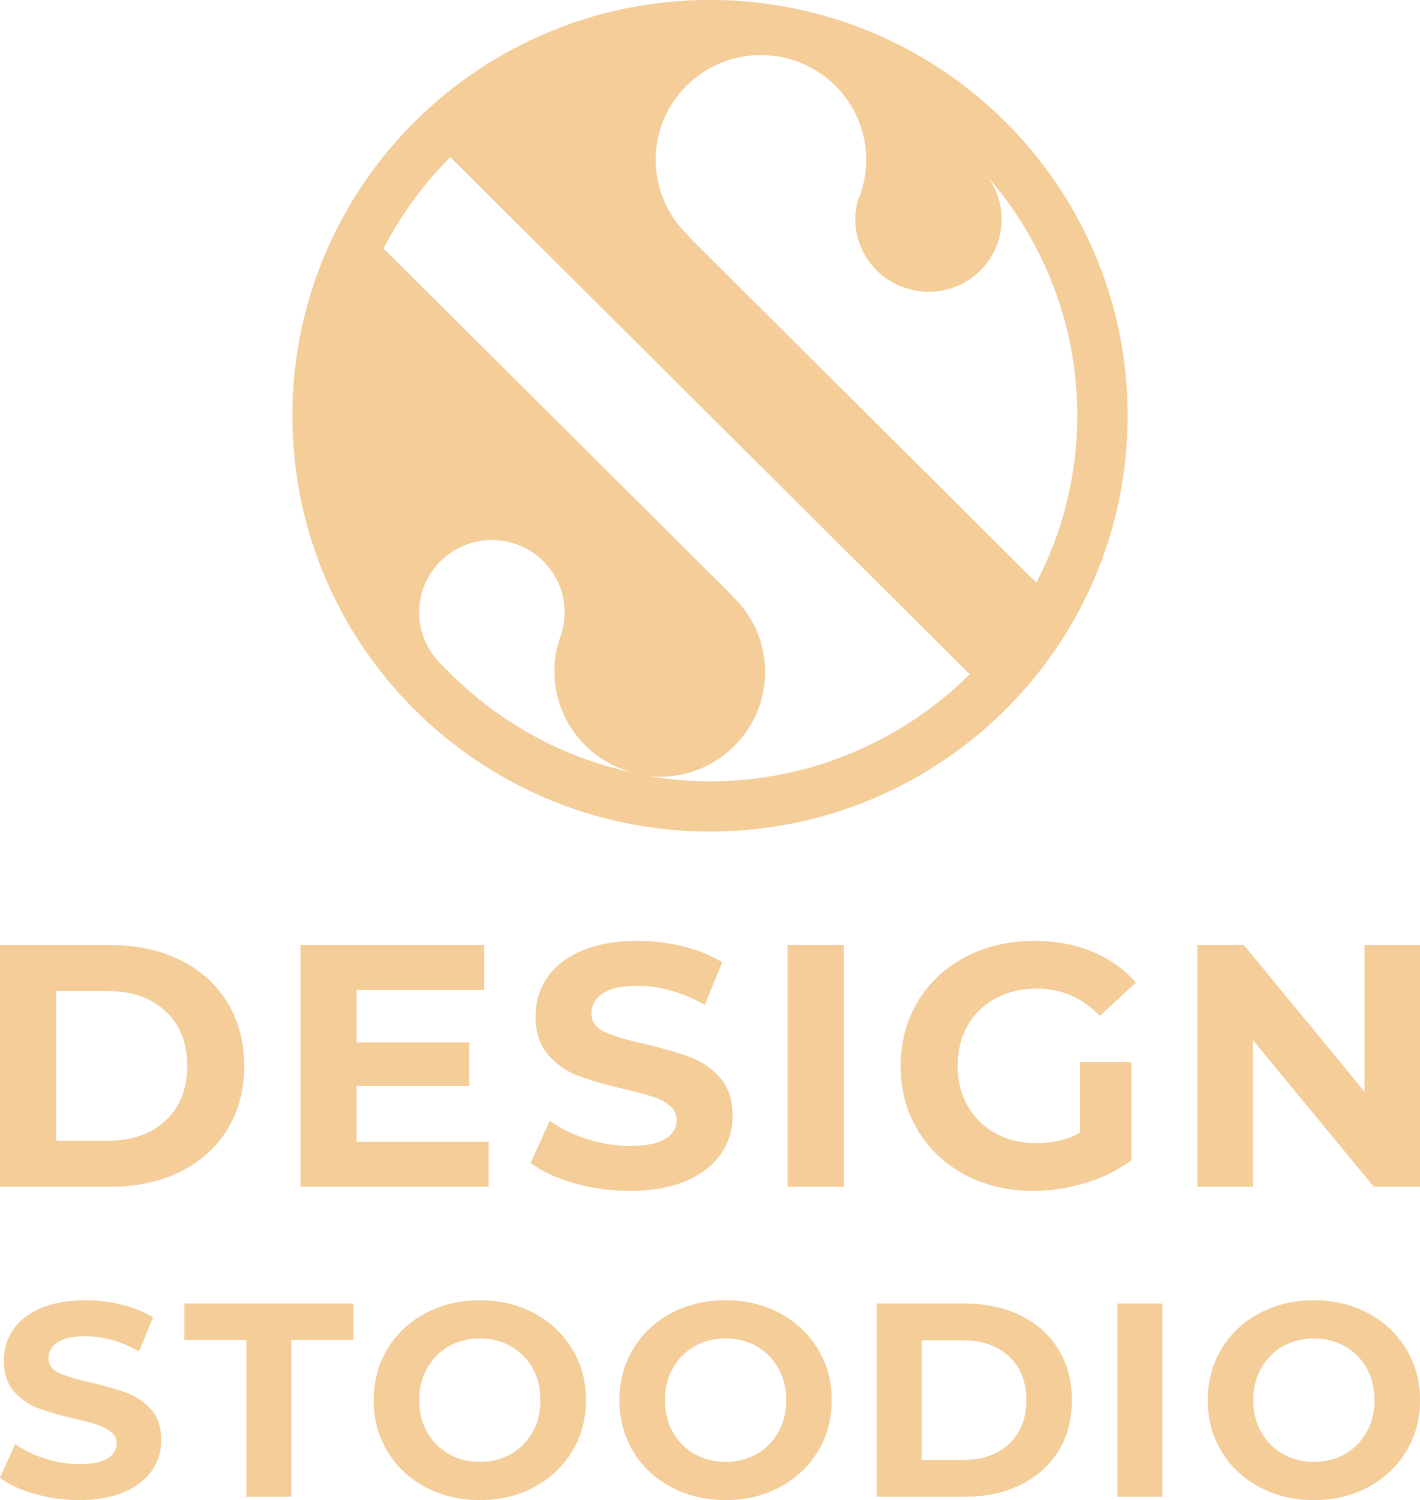 Design Stoodio